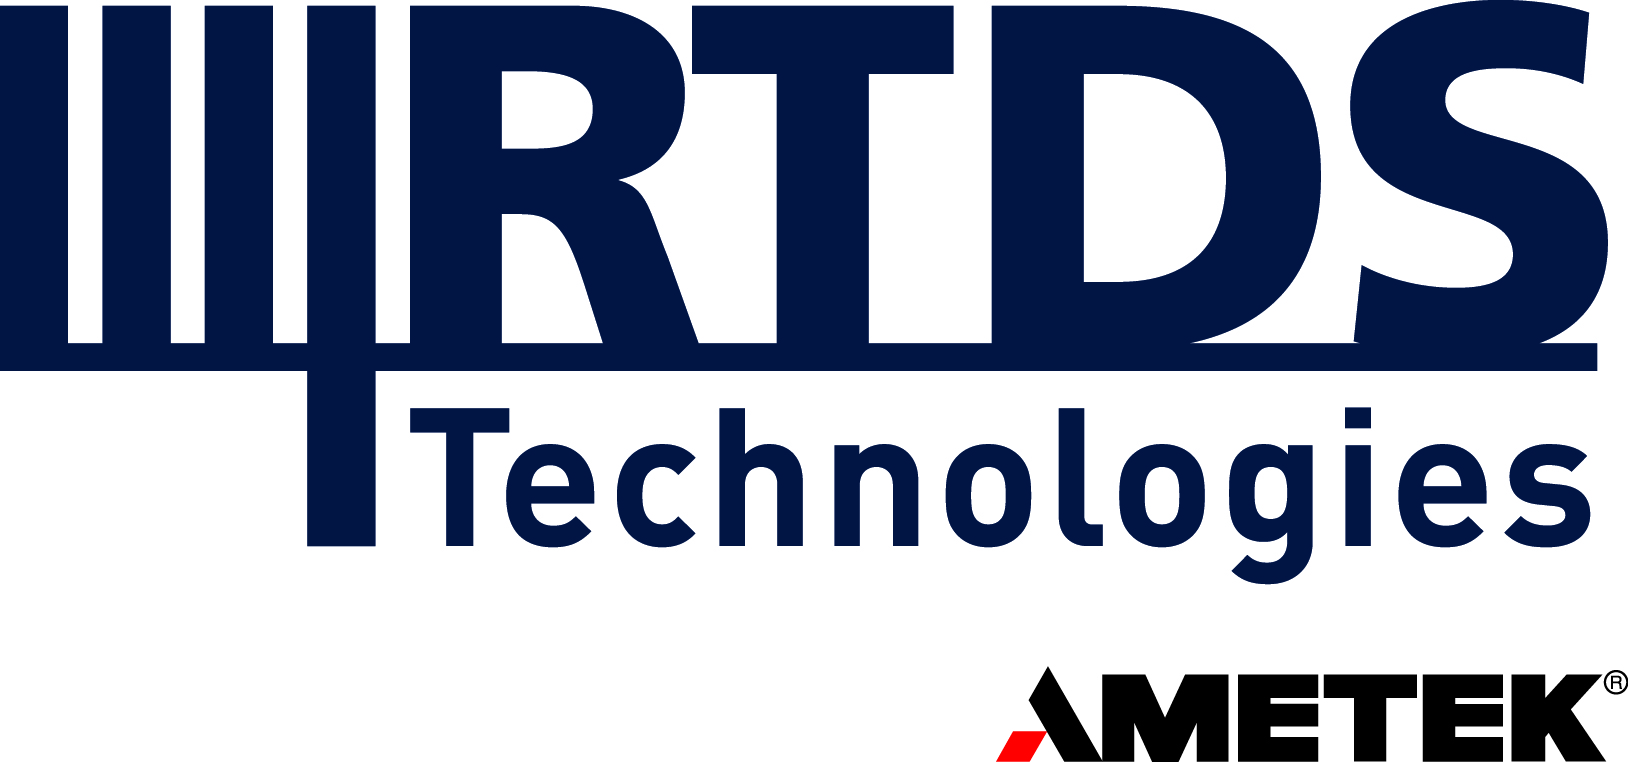 RTDS_AMETEK logo_navy.jpg